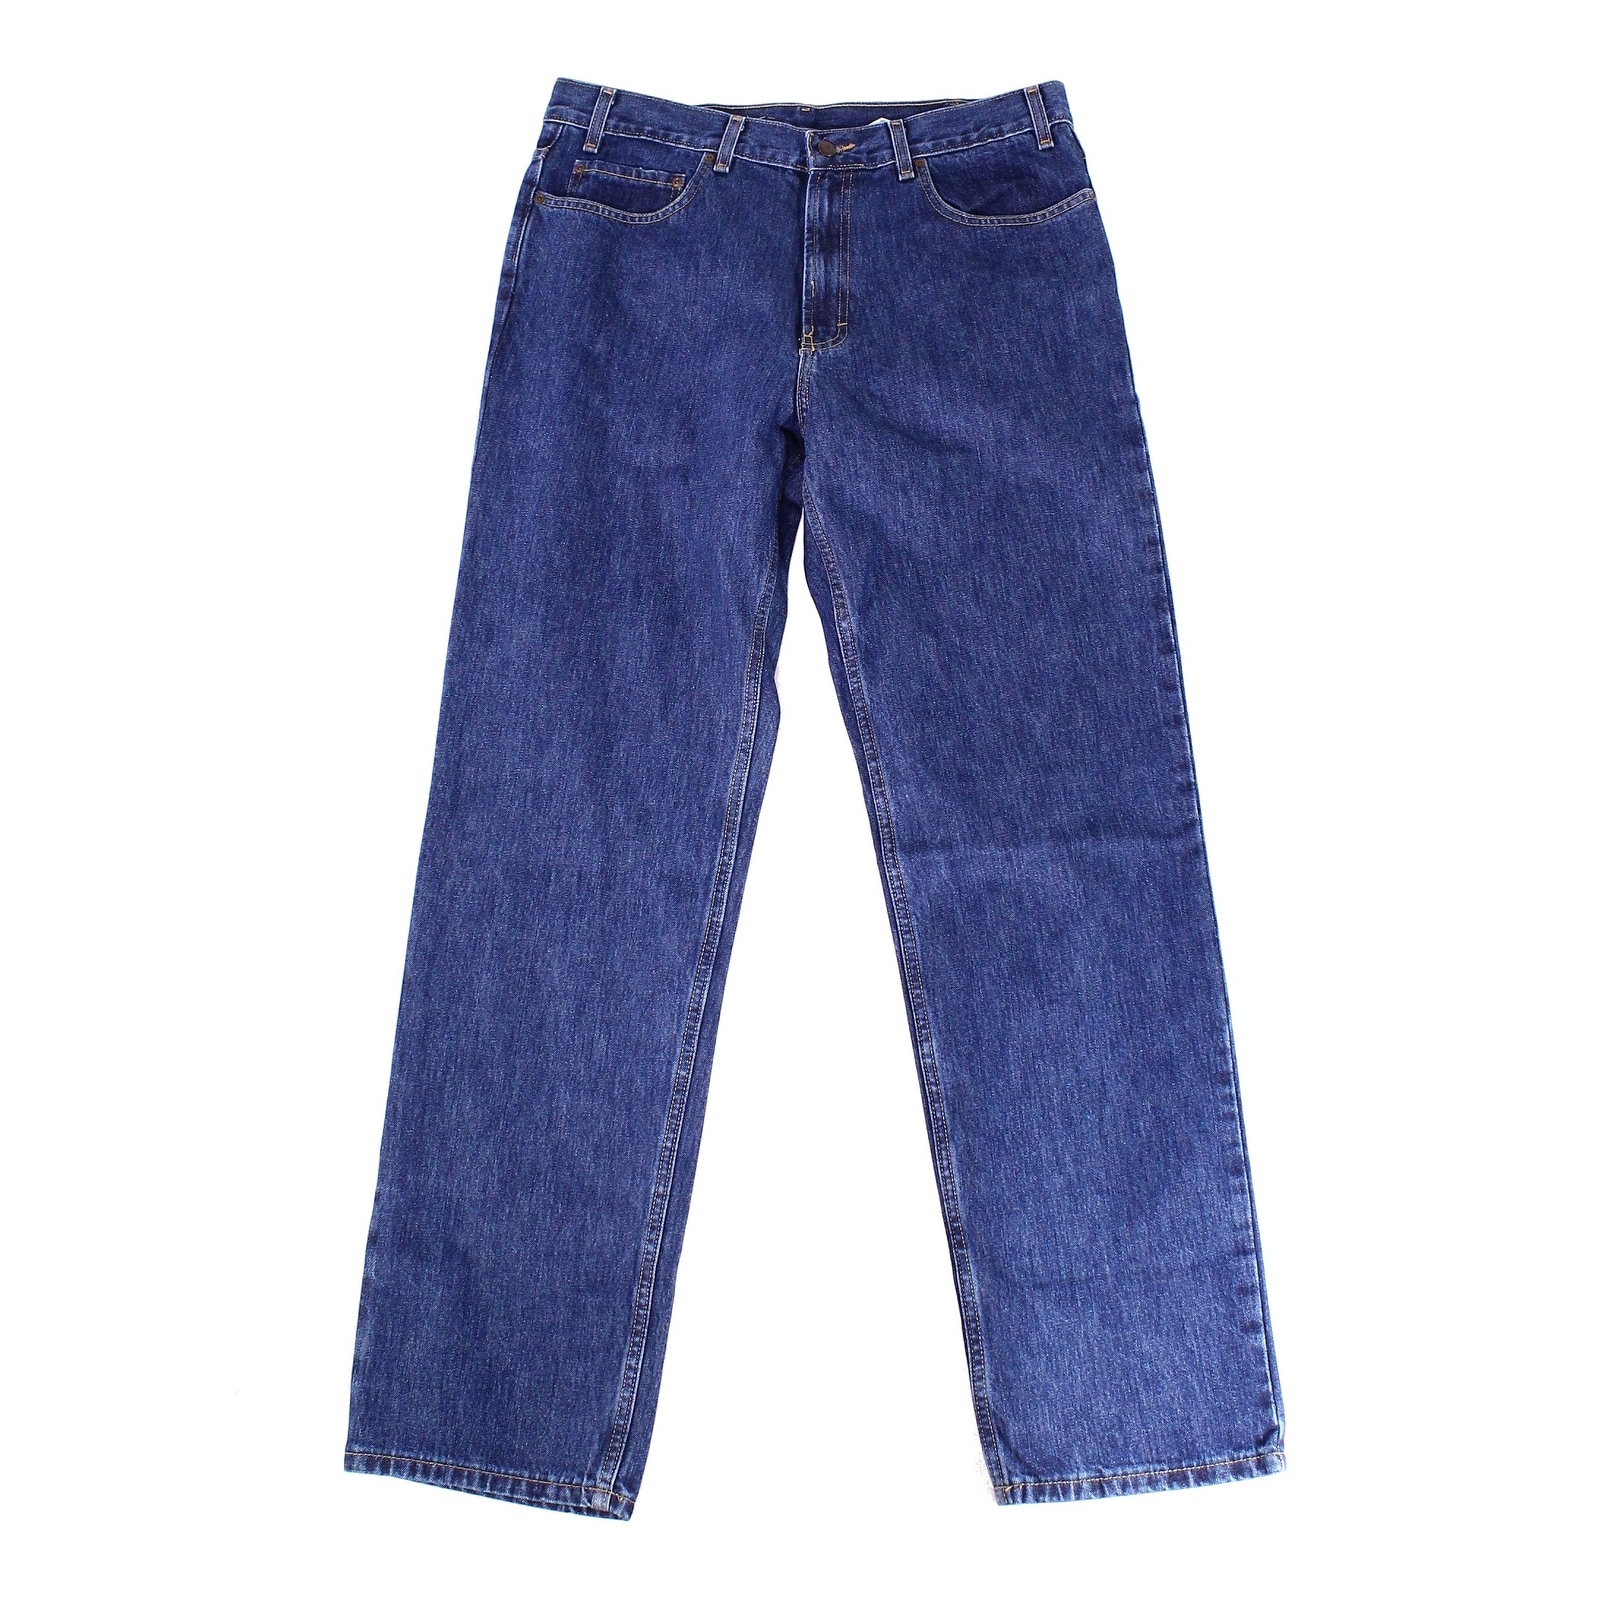 kirkland blue jeans